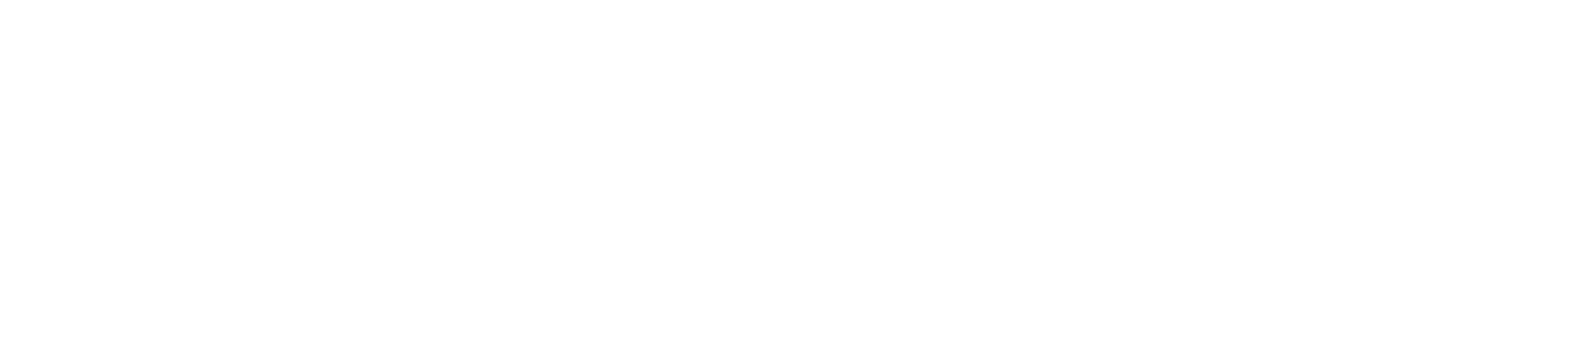 Synopsys logo large for dark backgrounds (transparent PNG)